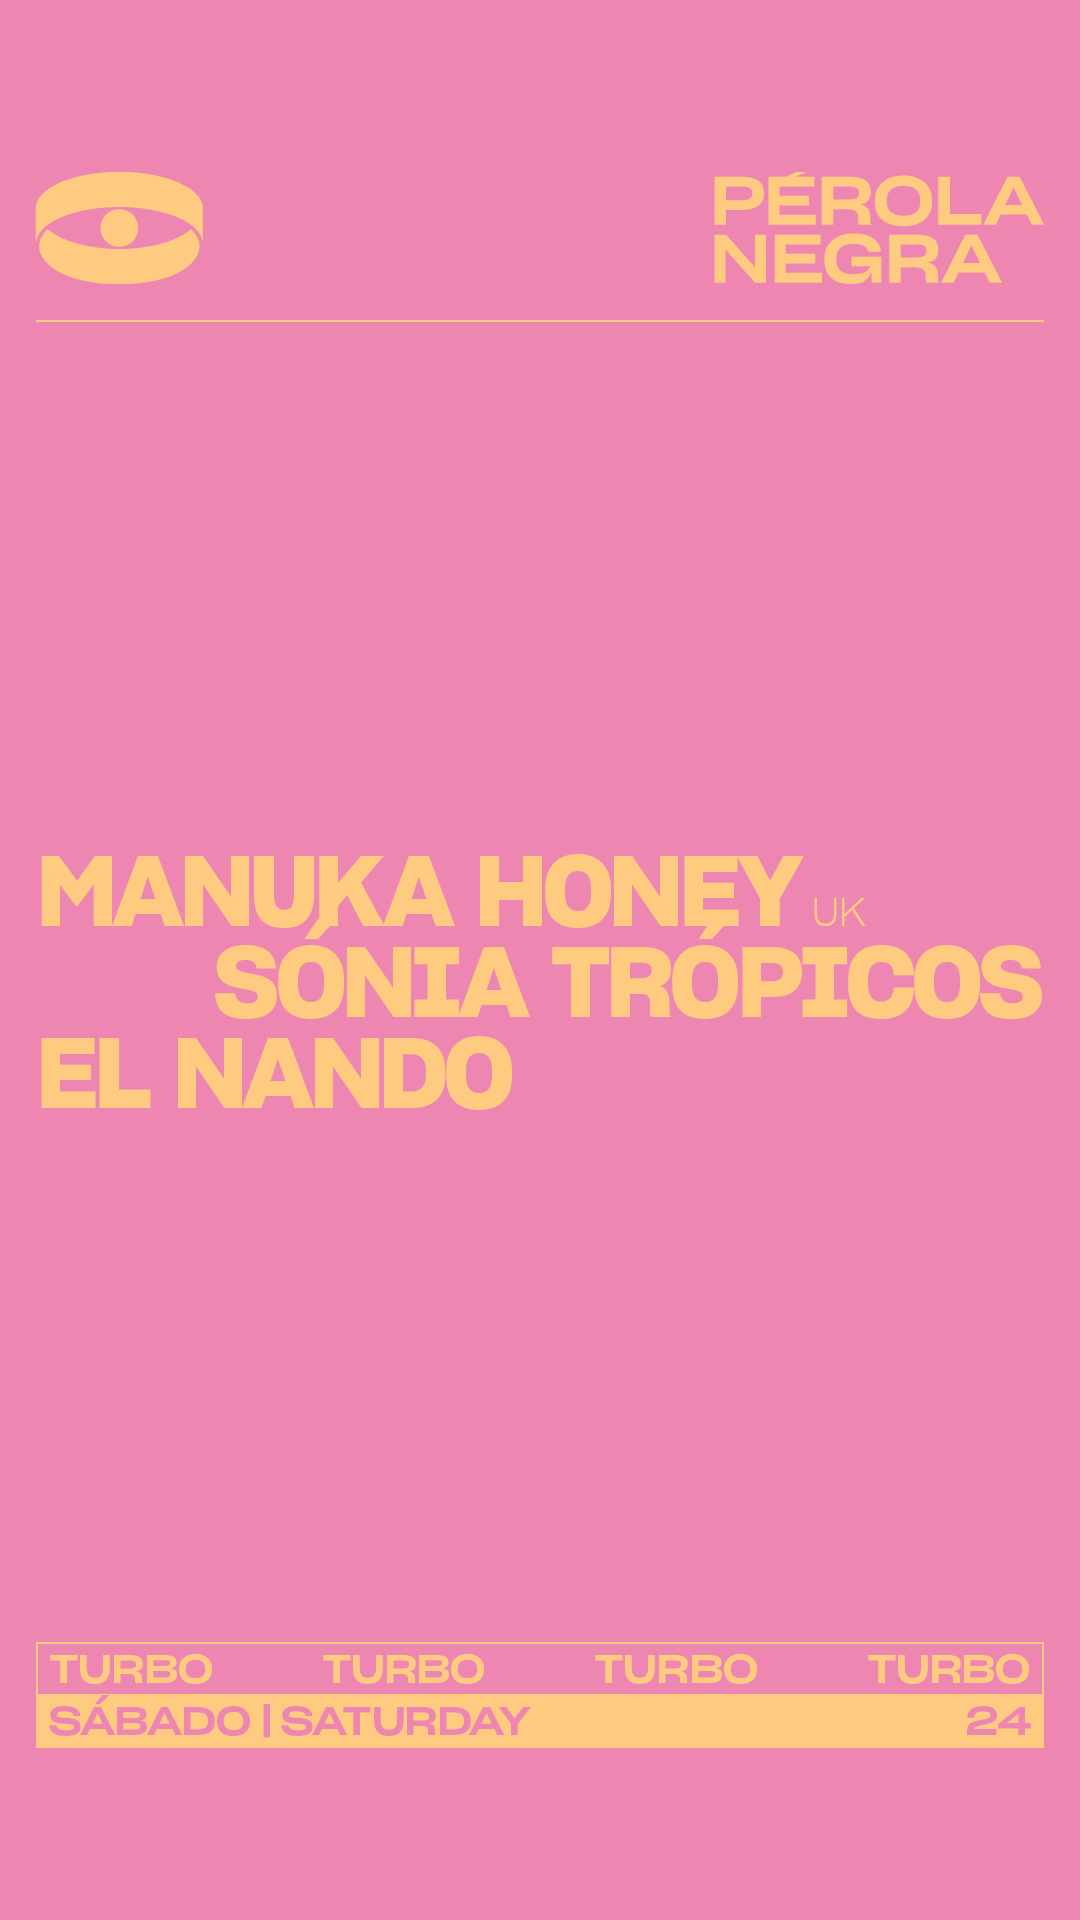 TURBO - Manuka Honey (UK), Sónia Trópicos, El Nando at Pérola